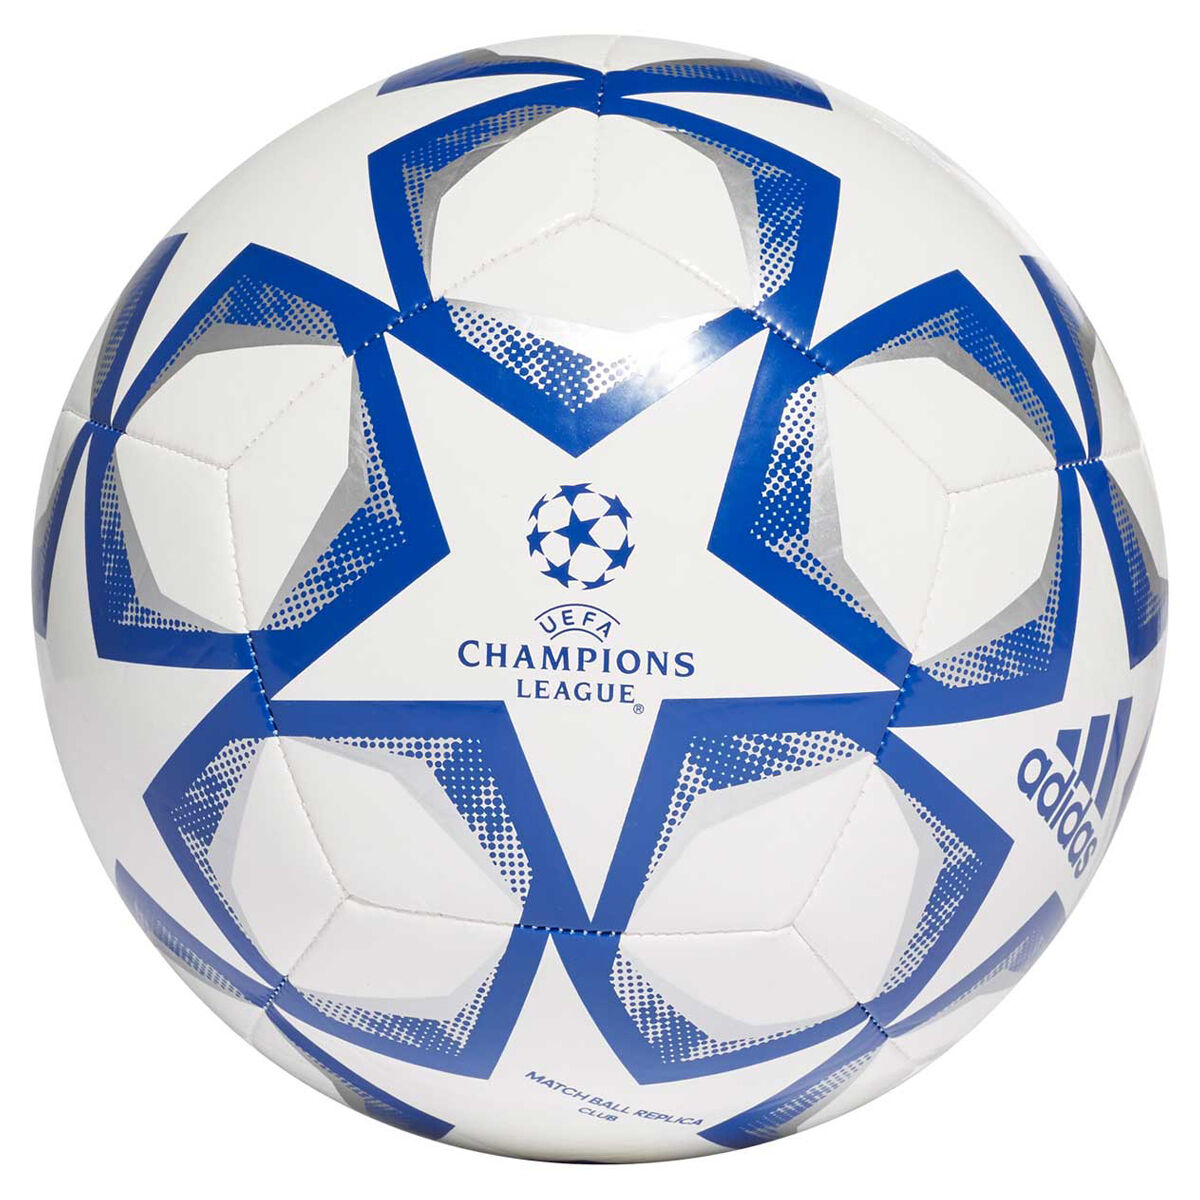 2020 uefa champions league ball